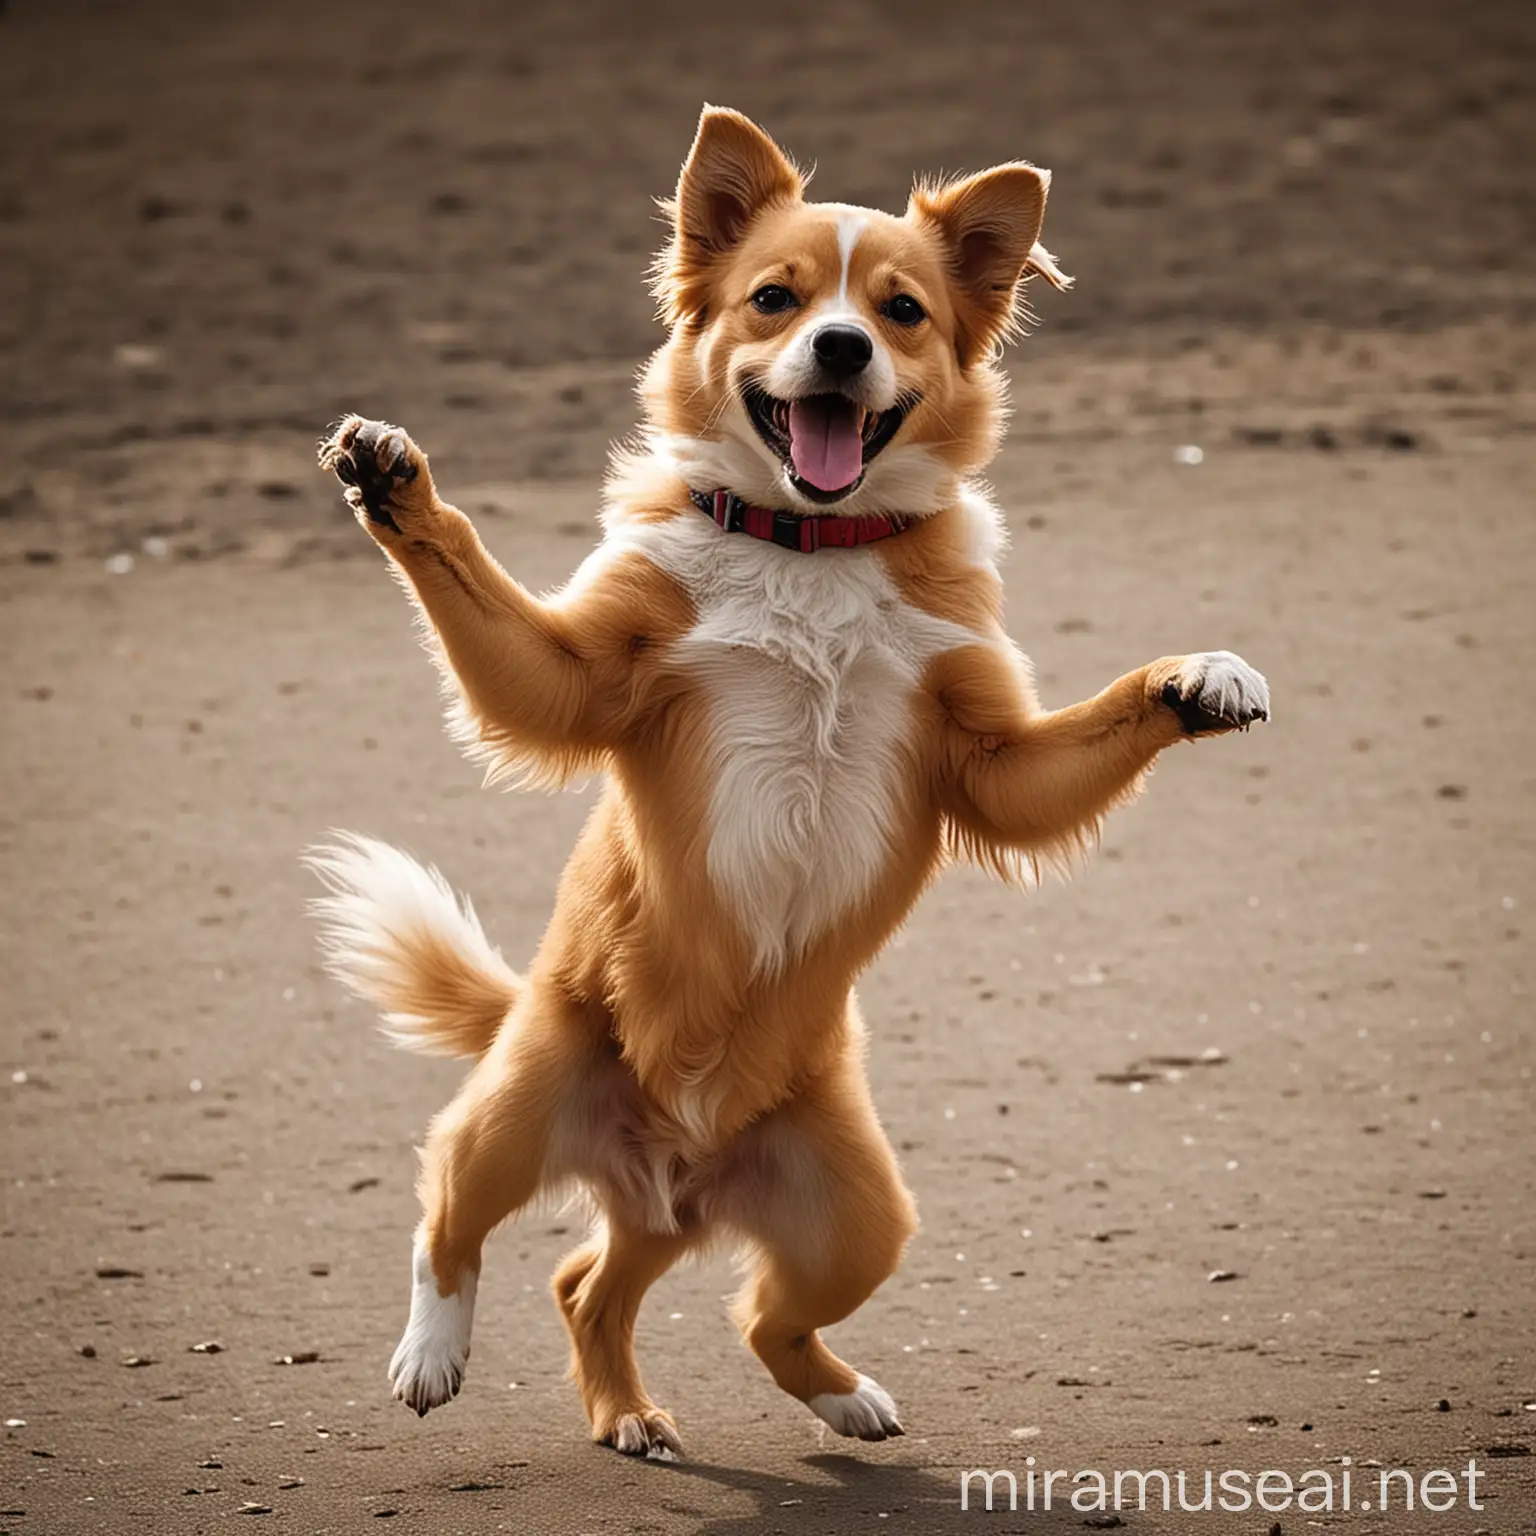 Energetic Labrador Retriever Dancing Playfully Outdoors